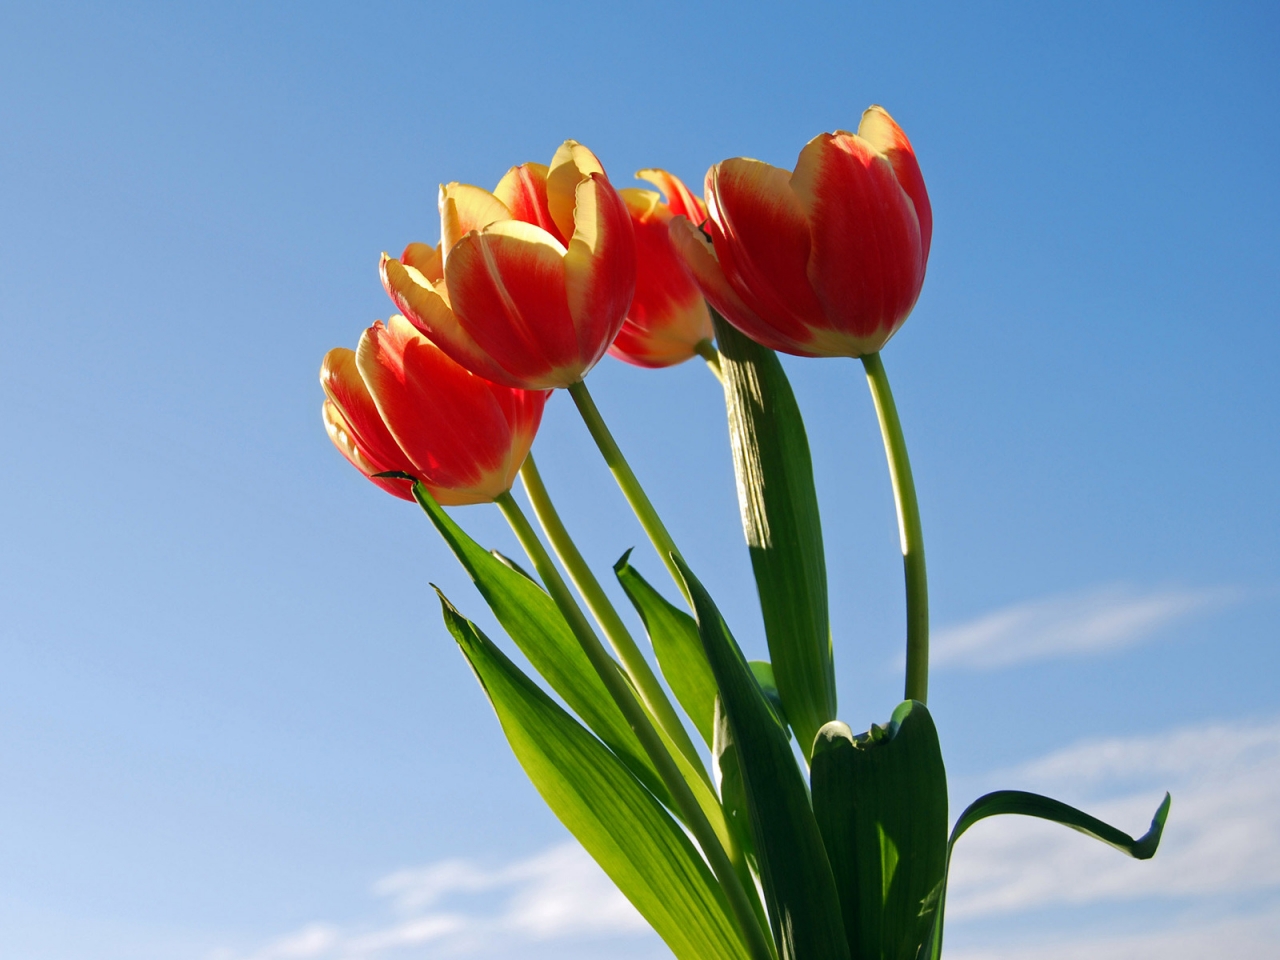 Sun Tulips for 1280 x 960 resolution